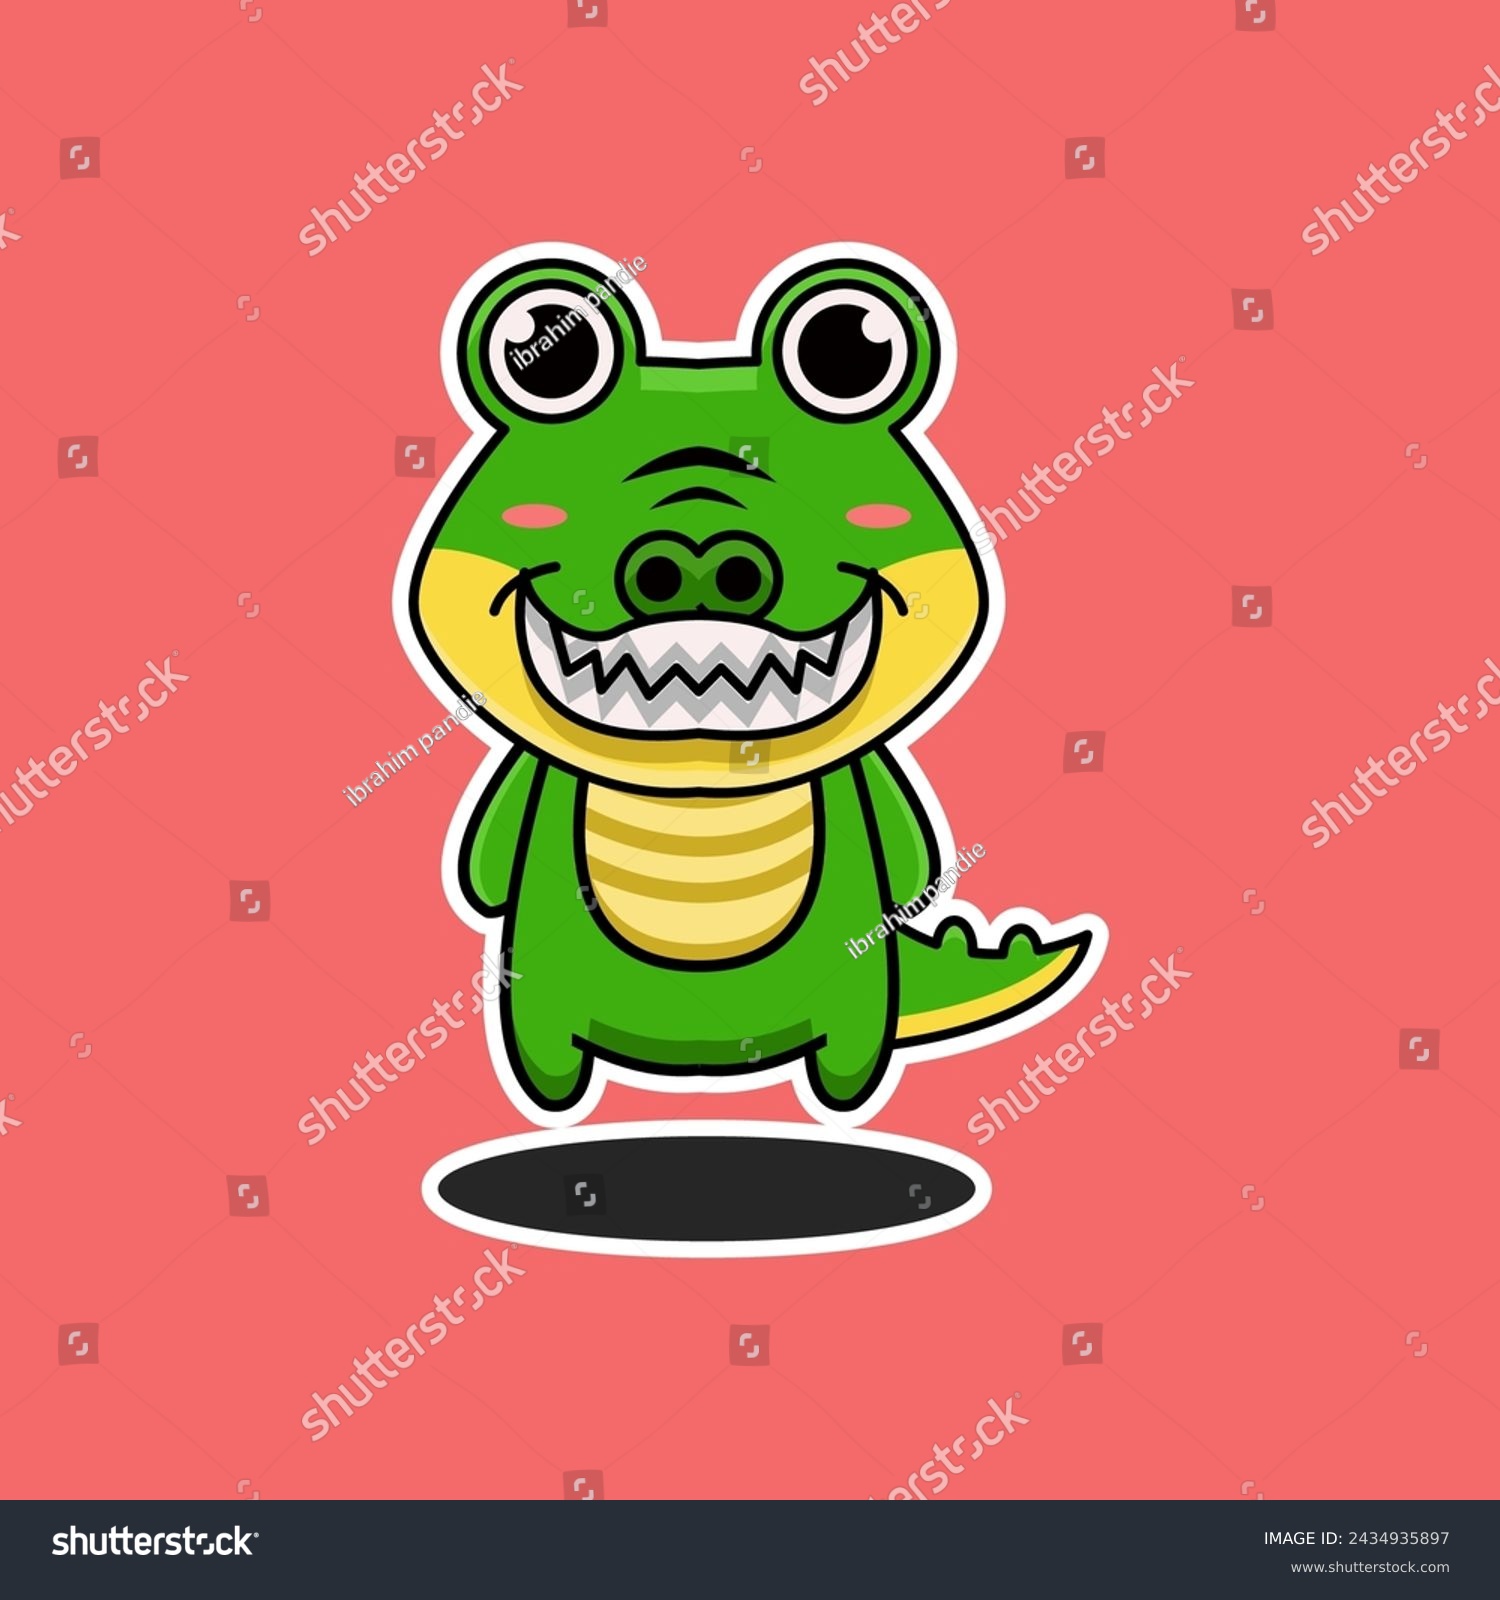 SVG of cute vector design illustration of a crocodile mascot svg